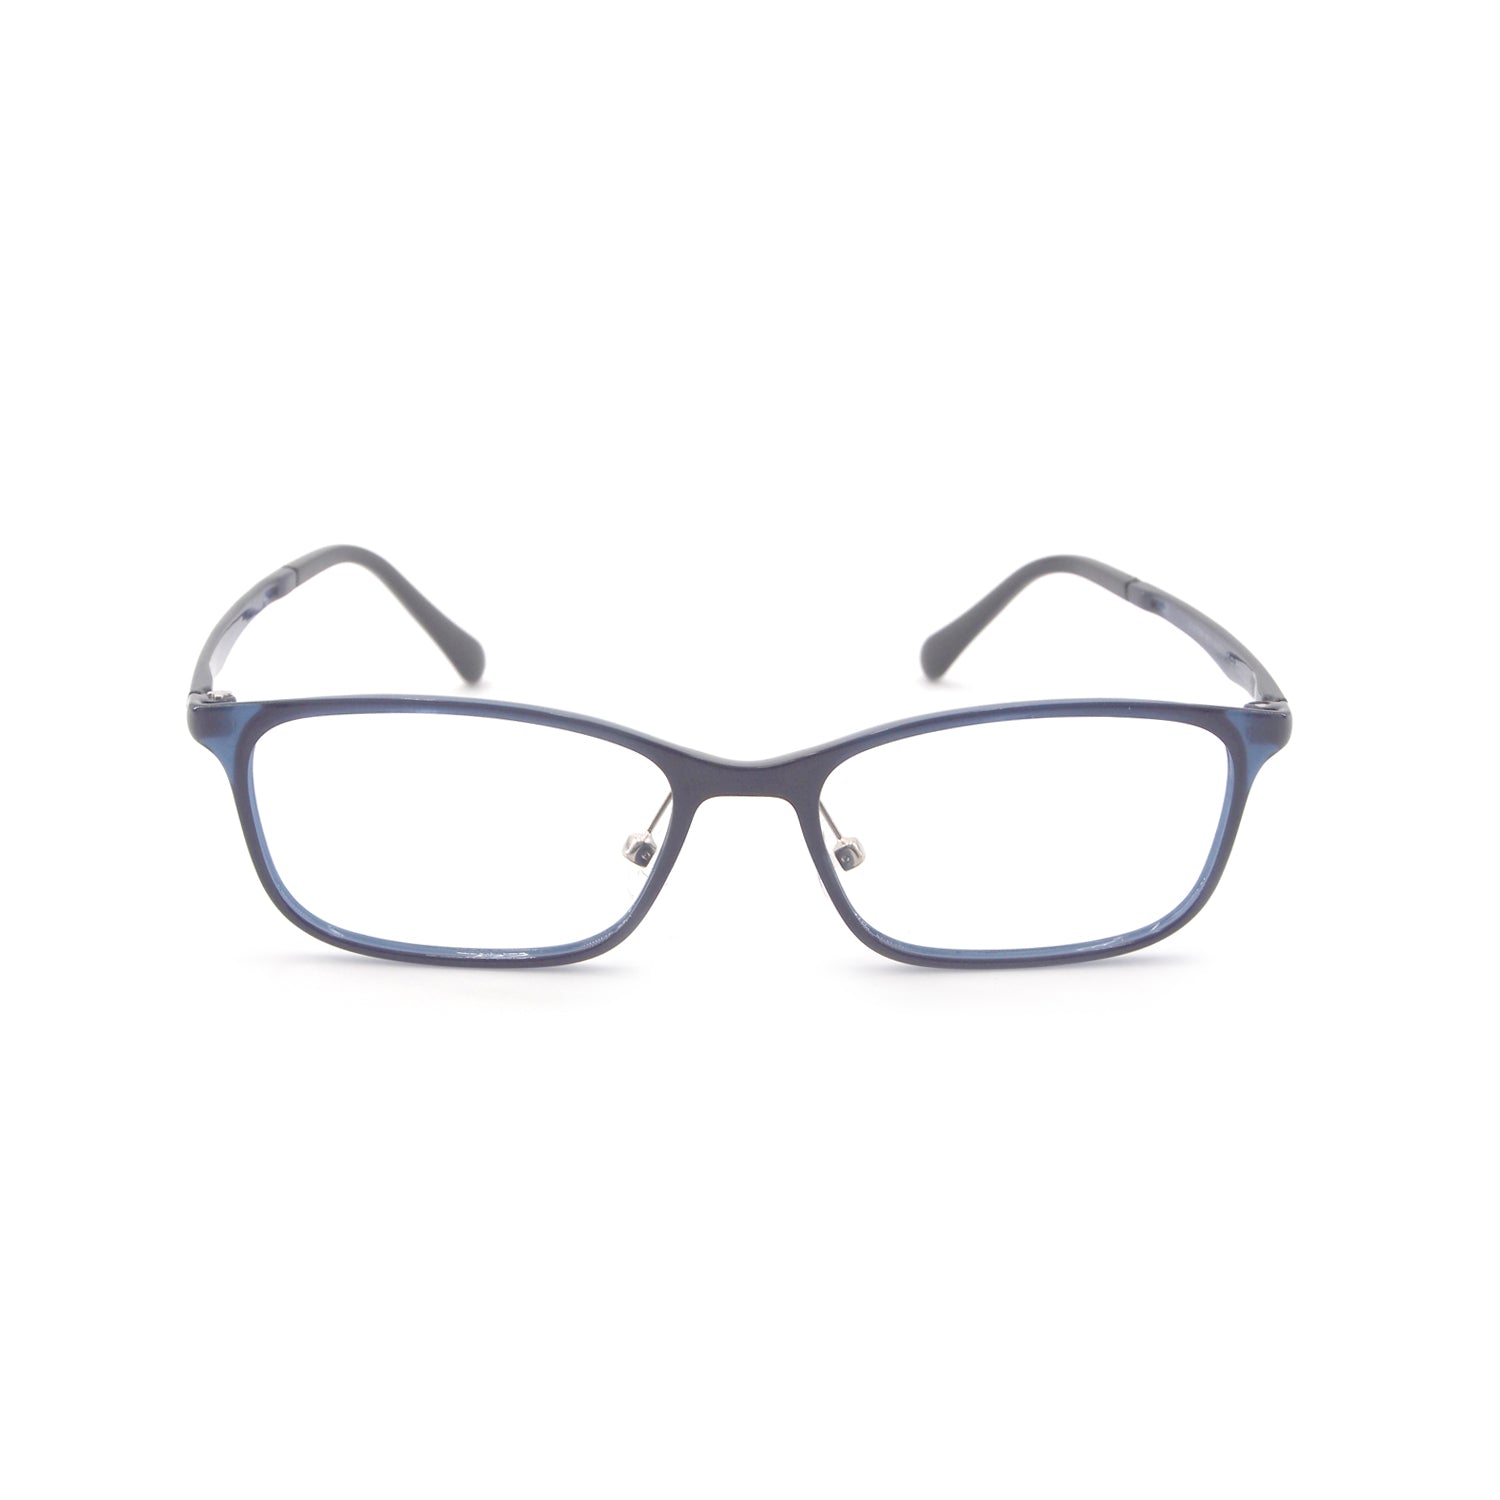 Zephyr in Resolute Blue Eyeglasses - sightonomy